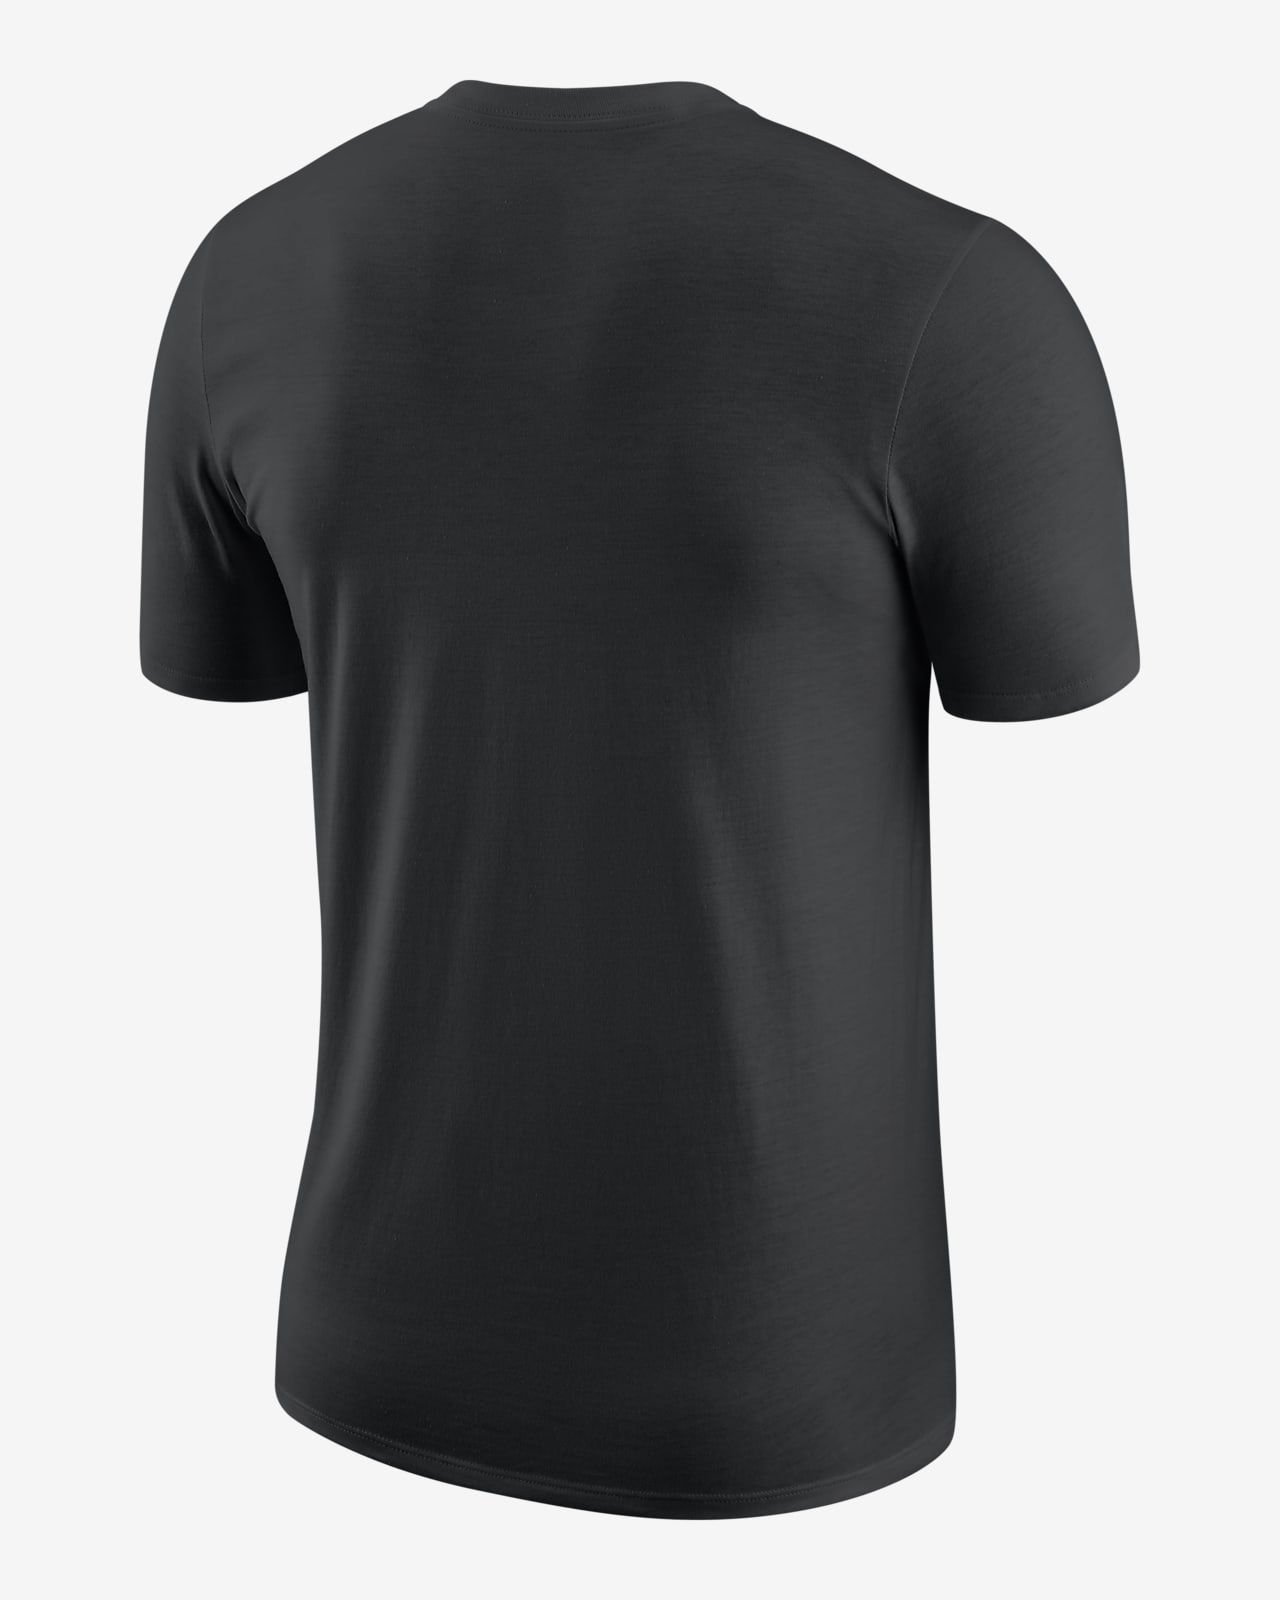 Old Navy Chicago Bulls Gender-Neutral T-Shirt For Adults Noir Regular Size G